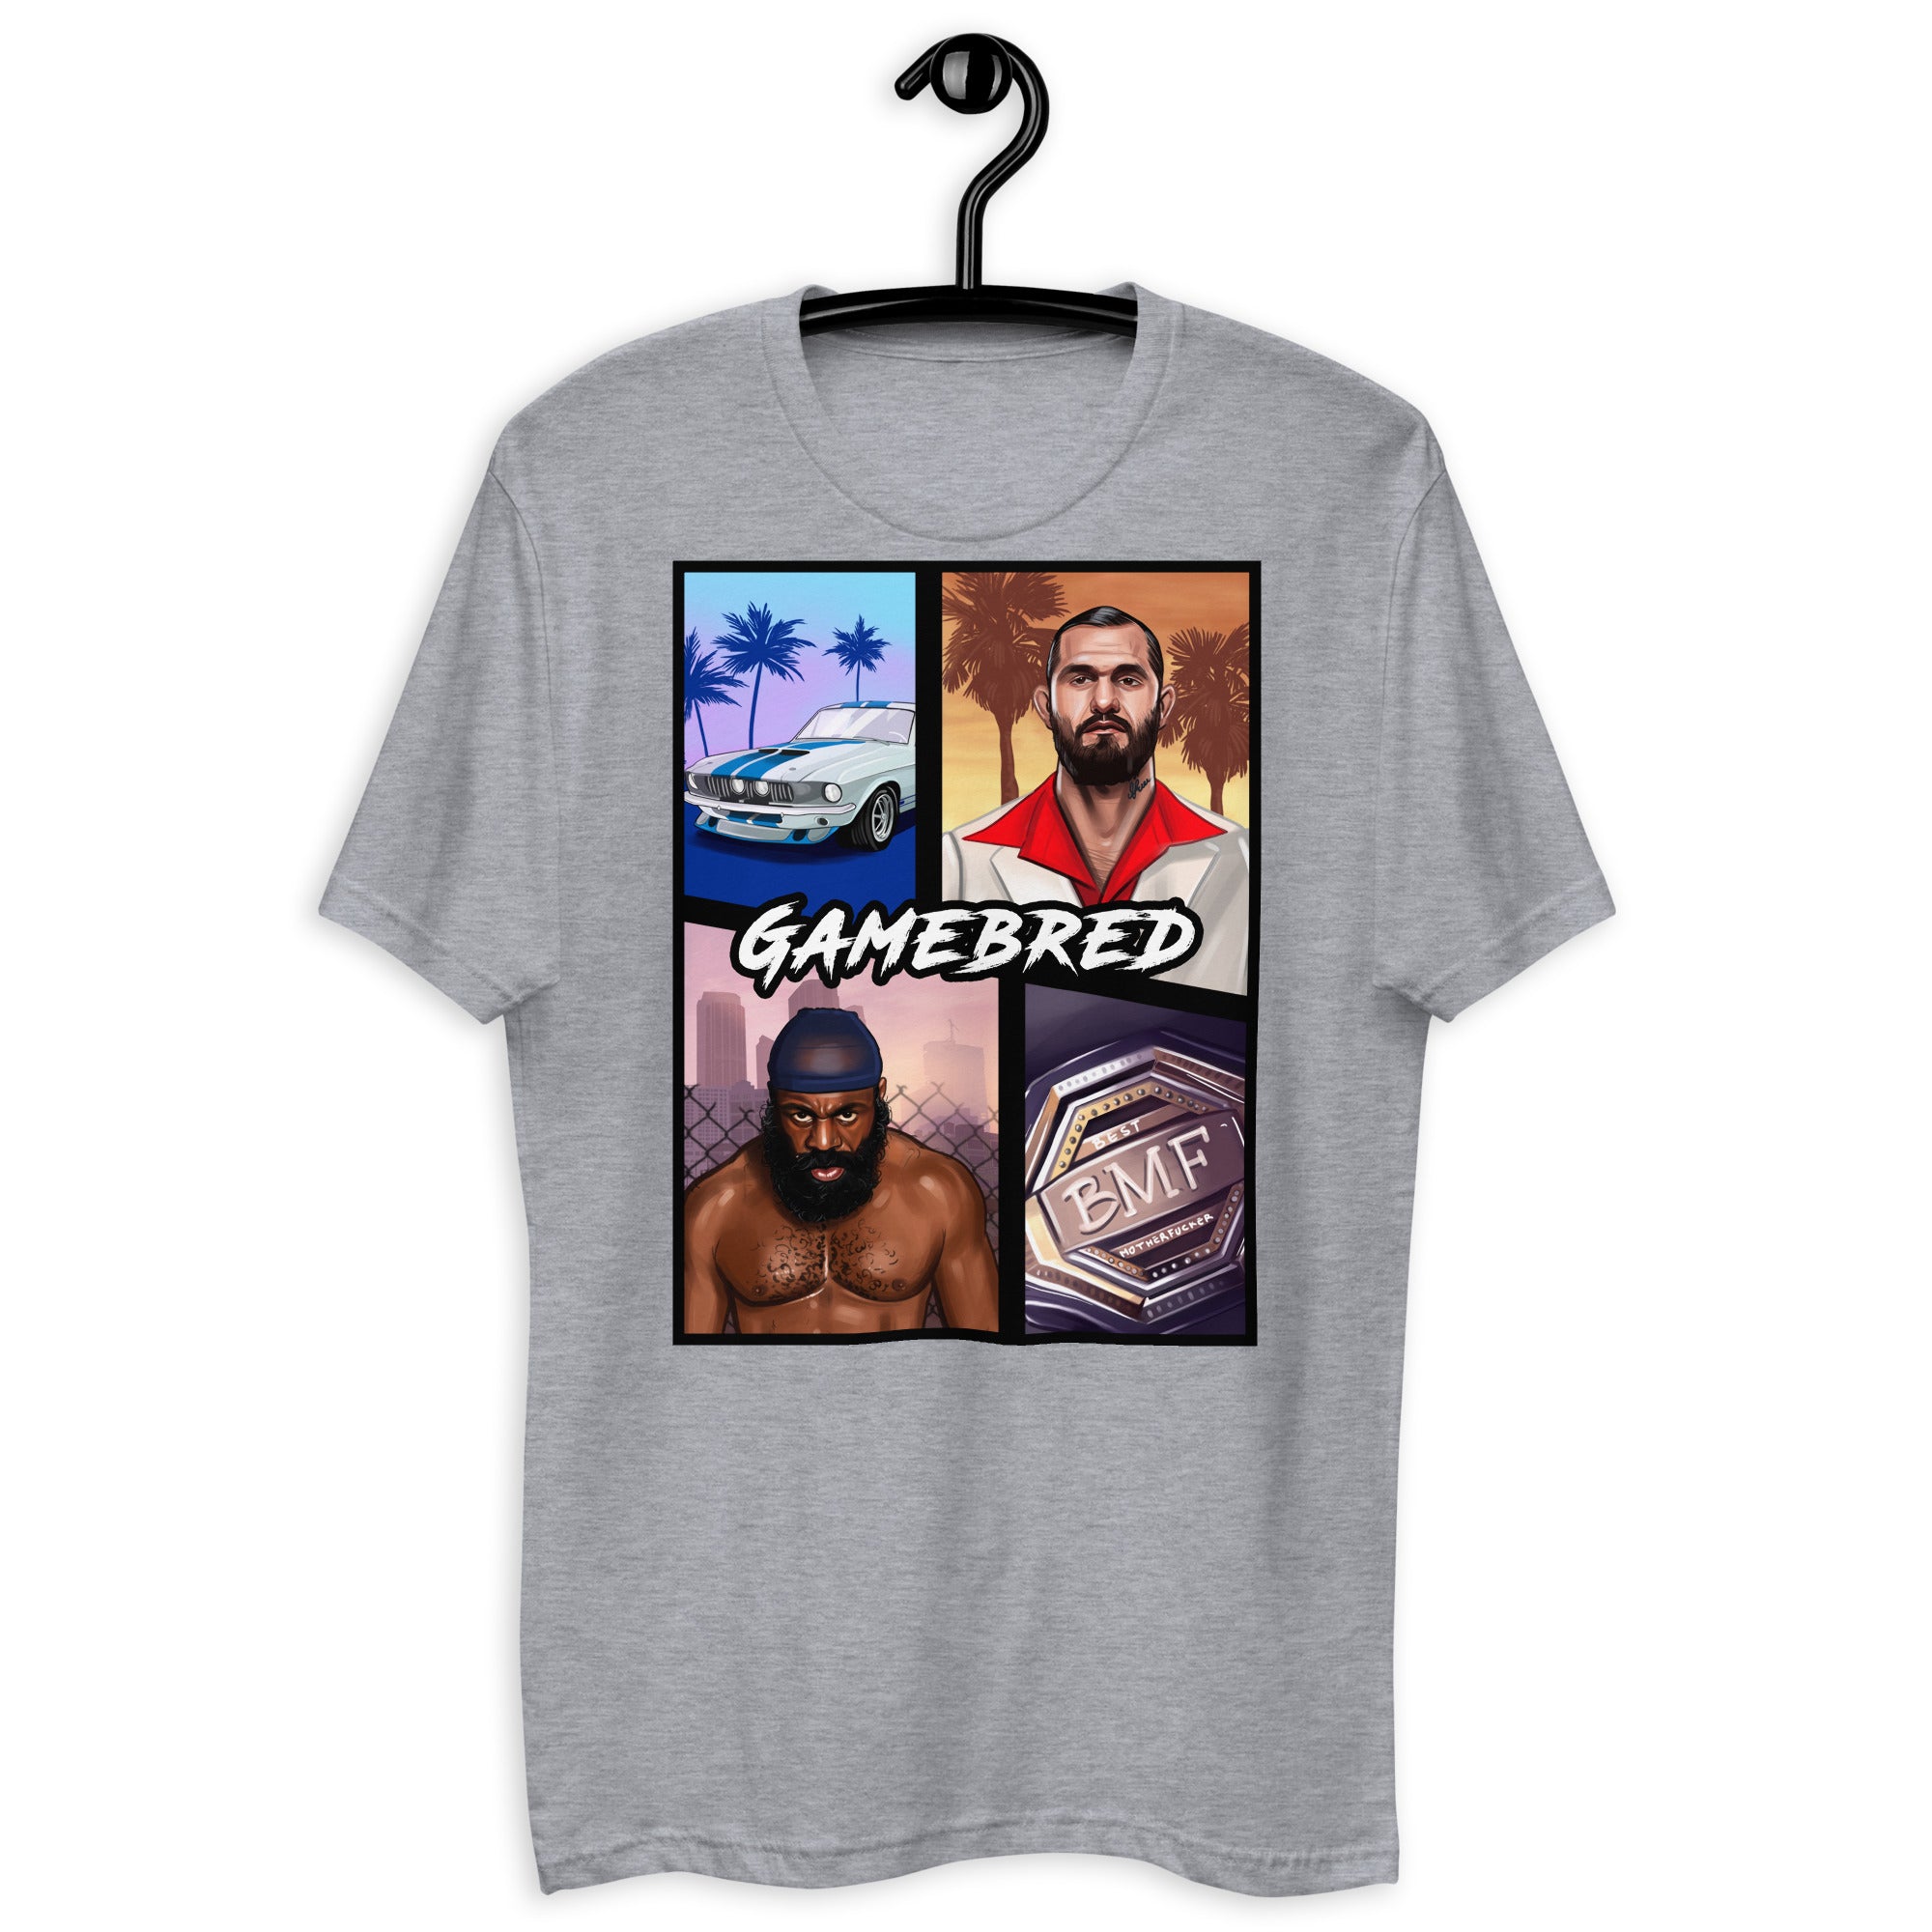 GTA Vice City - Jorge "The Gamebred" Masvidal T - Shirt